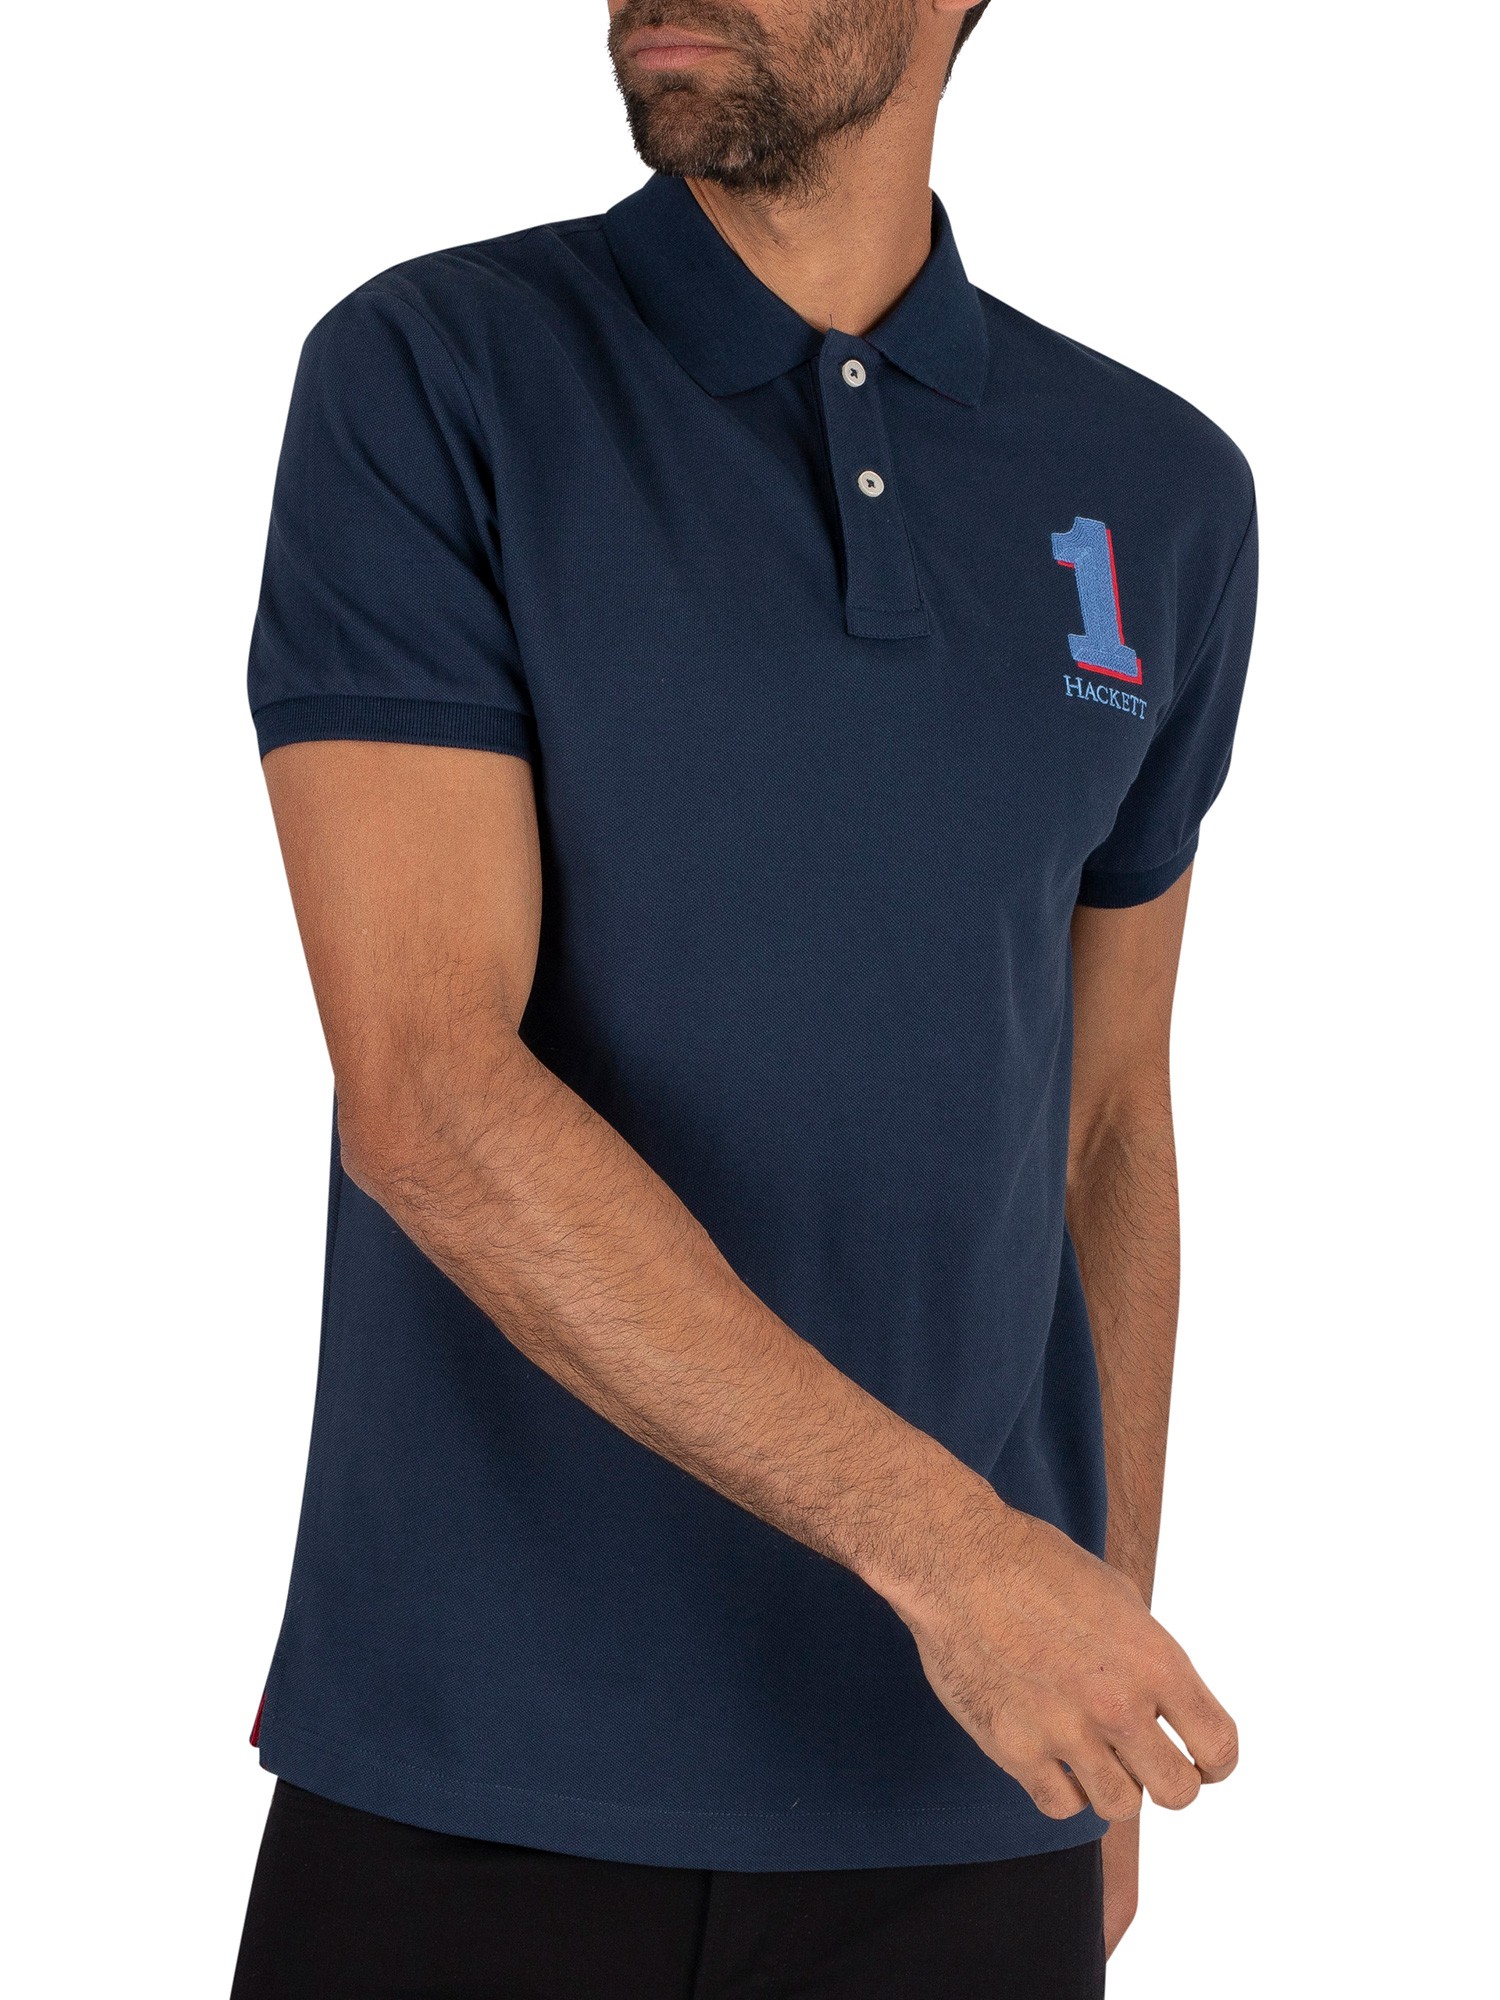 Hackett London Classic Polo Shirt - Navy | Standout